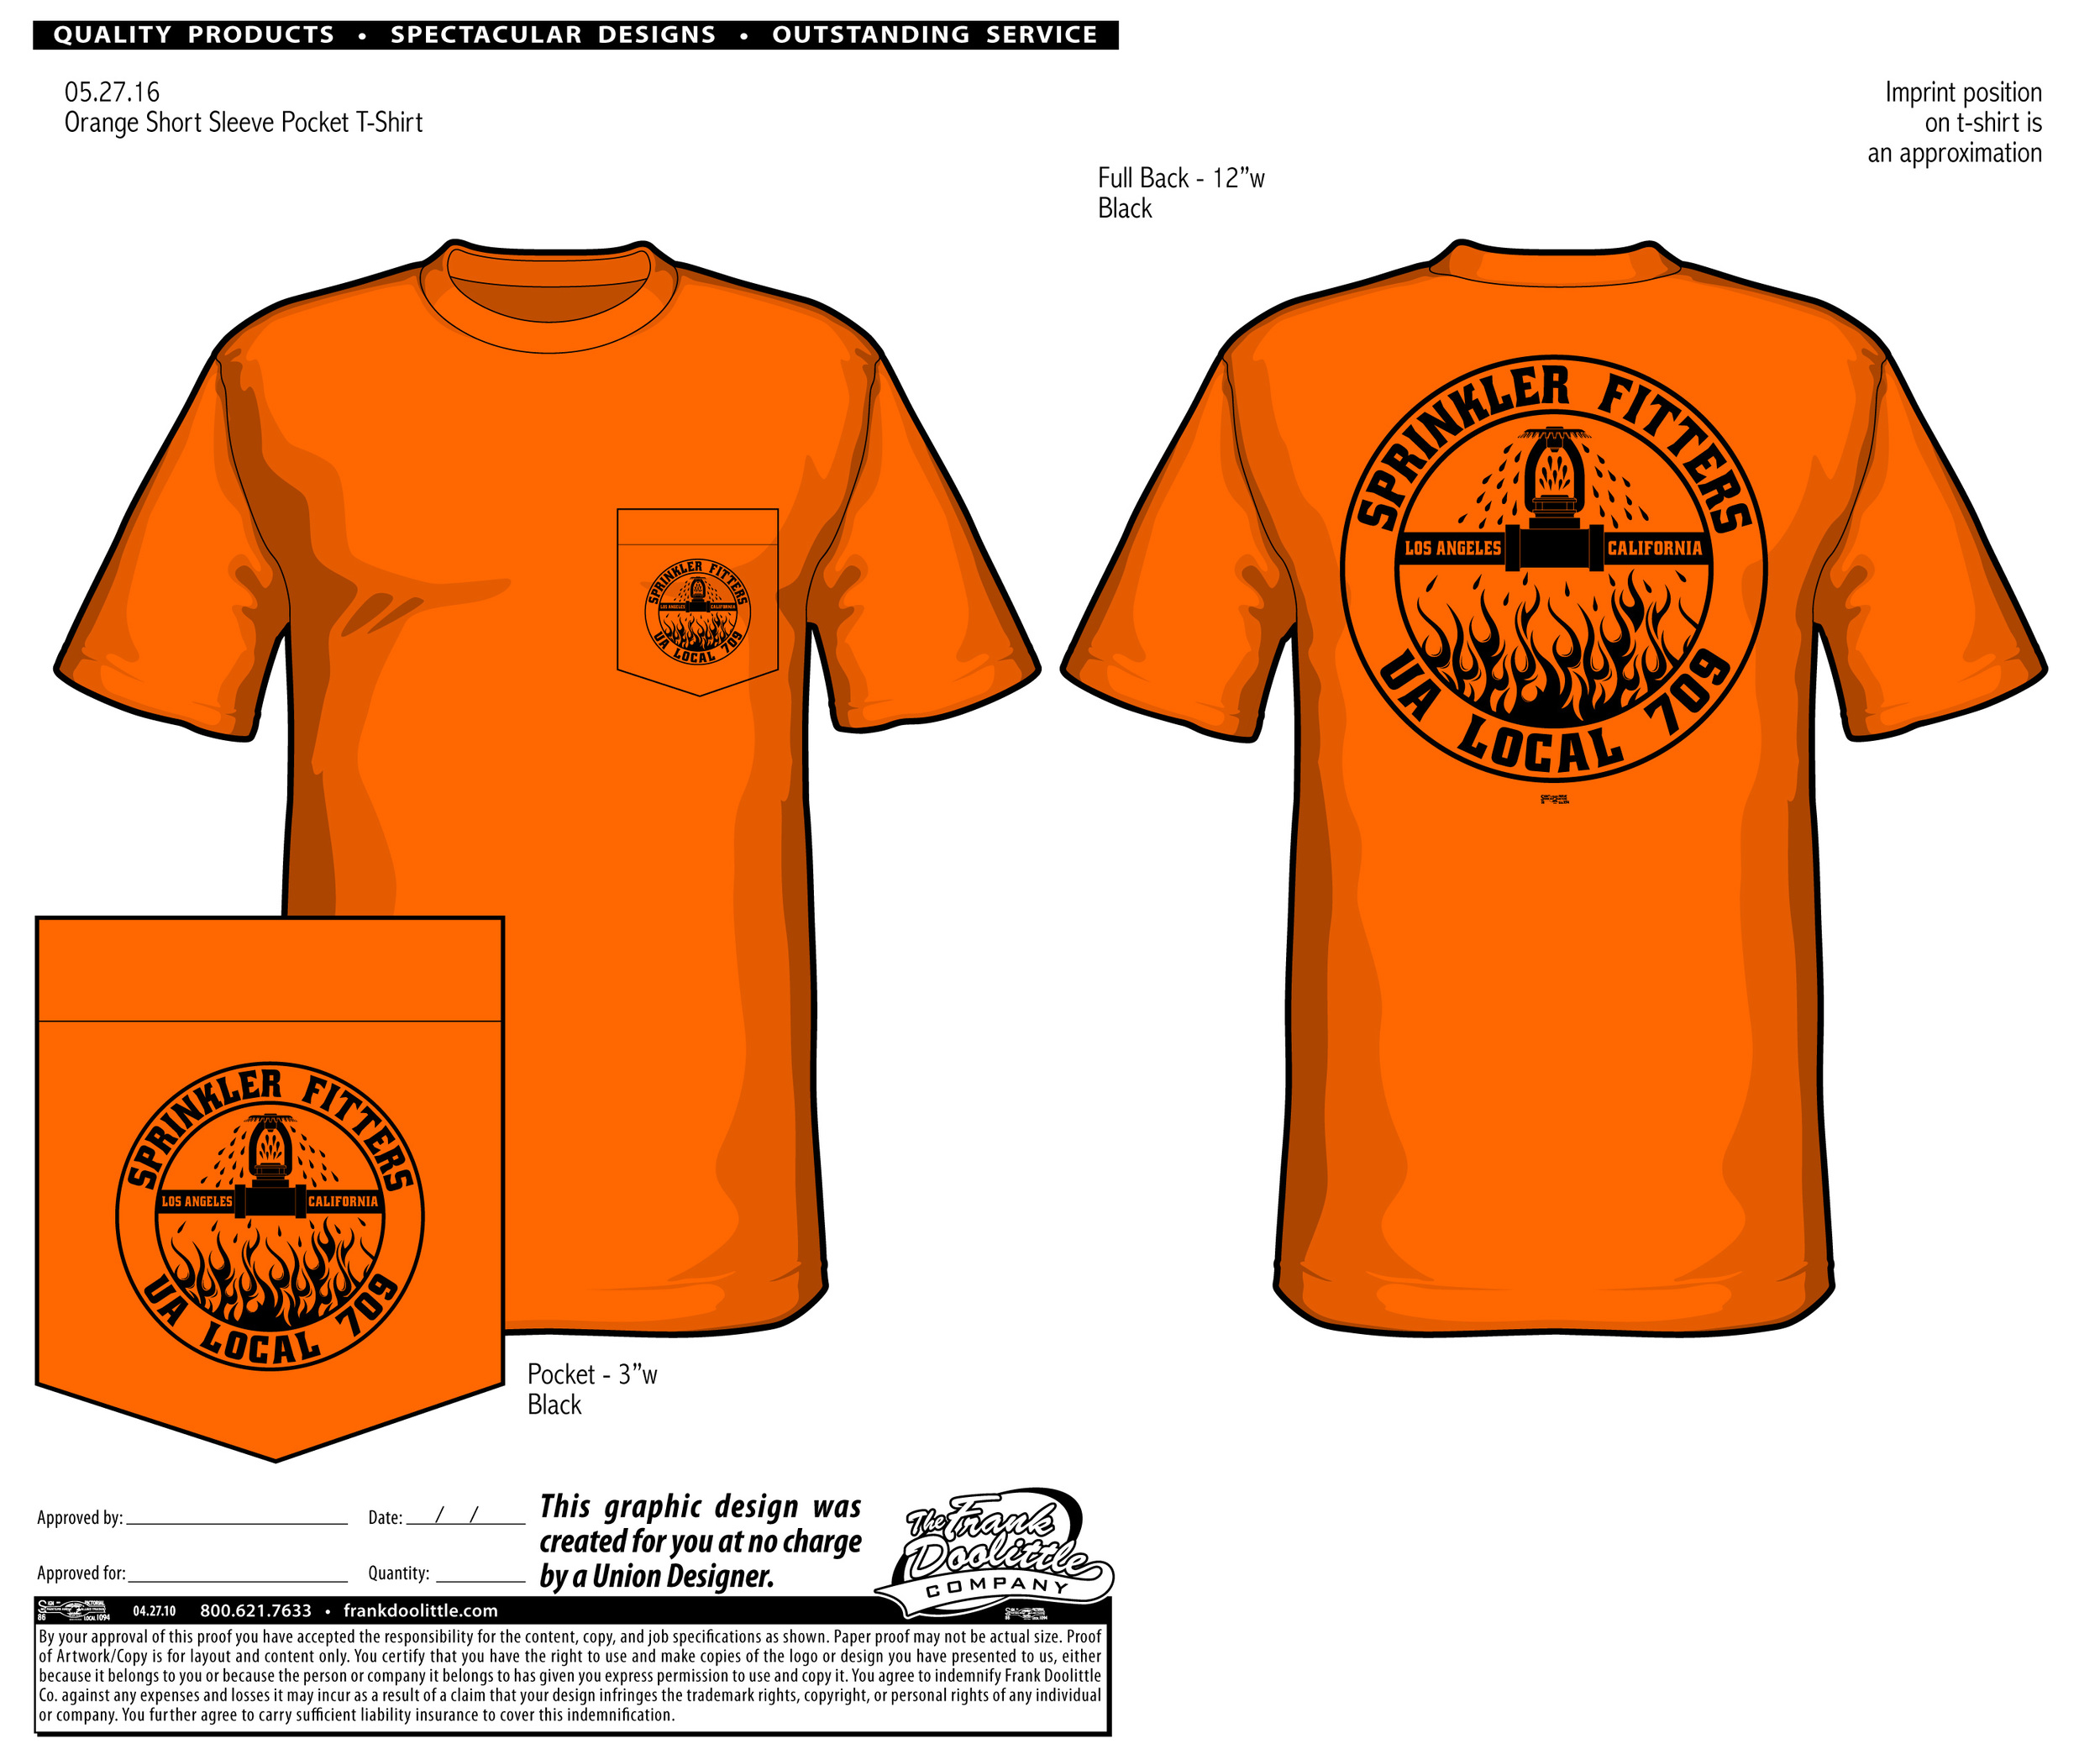 Bright Orange Shirts 06 15 16.jpg